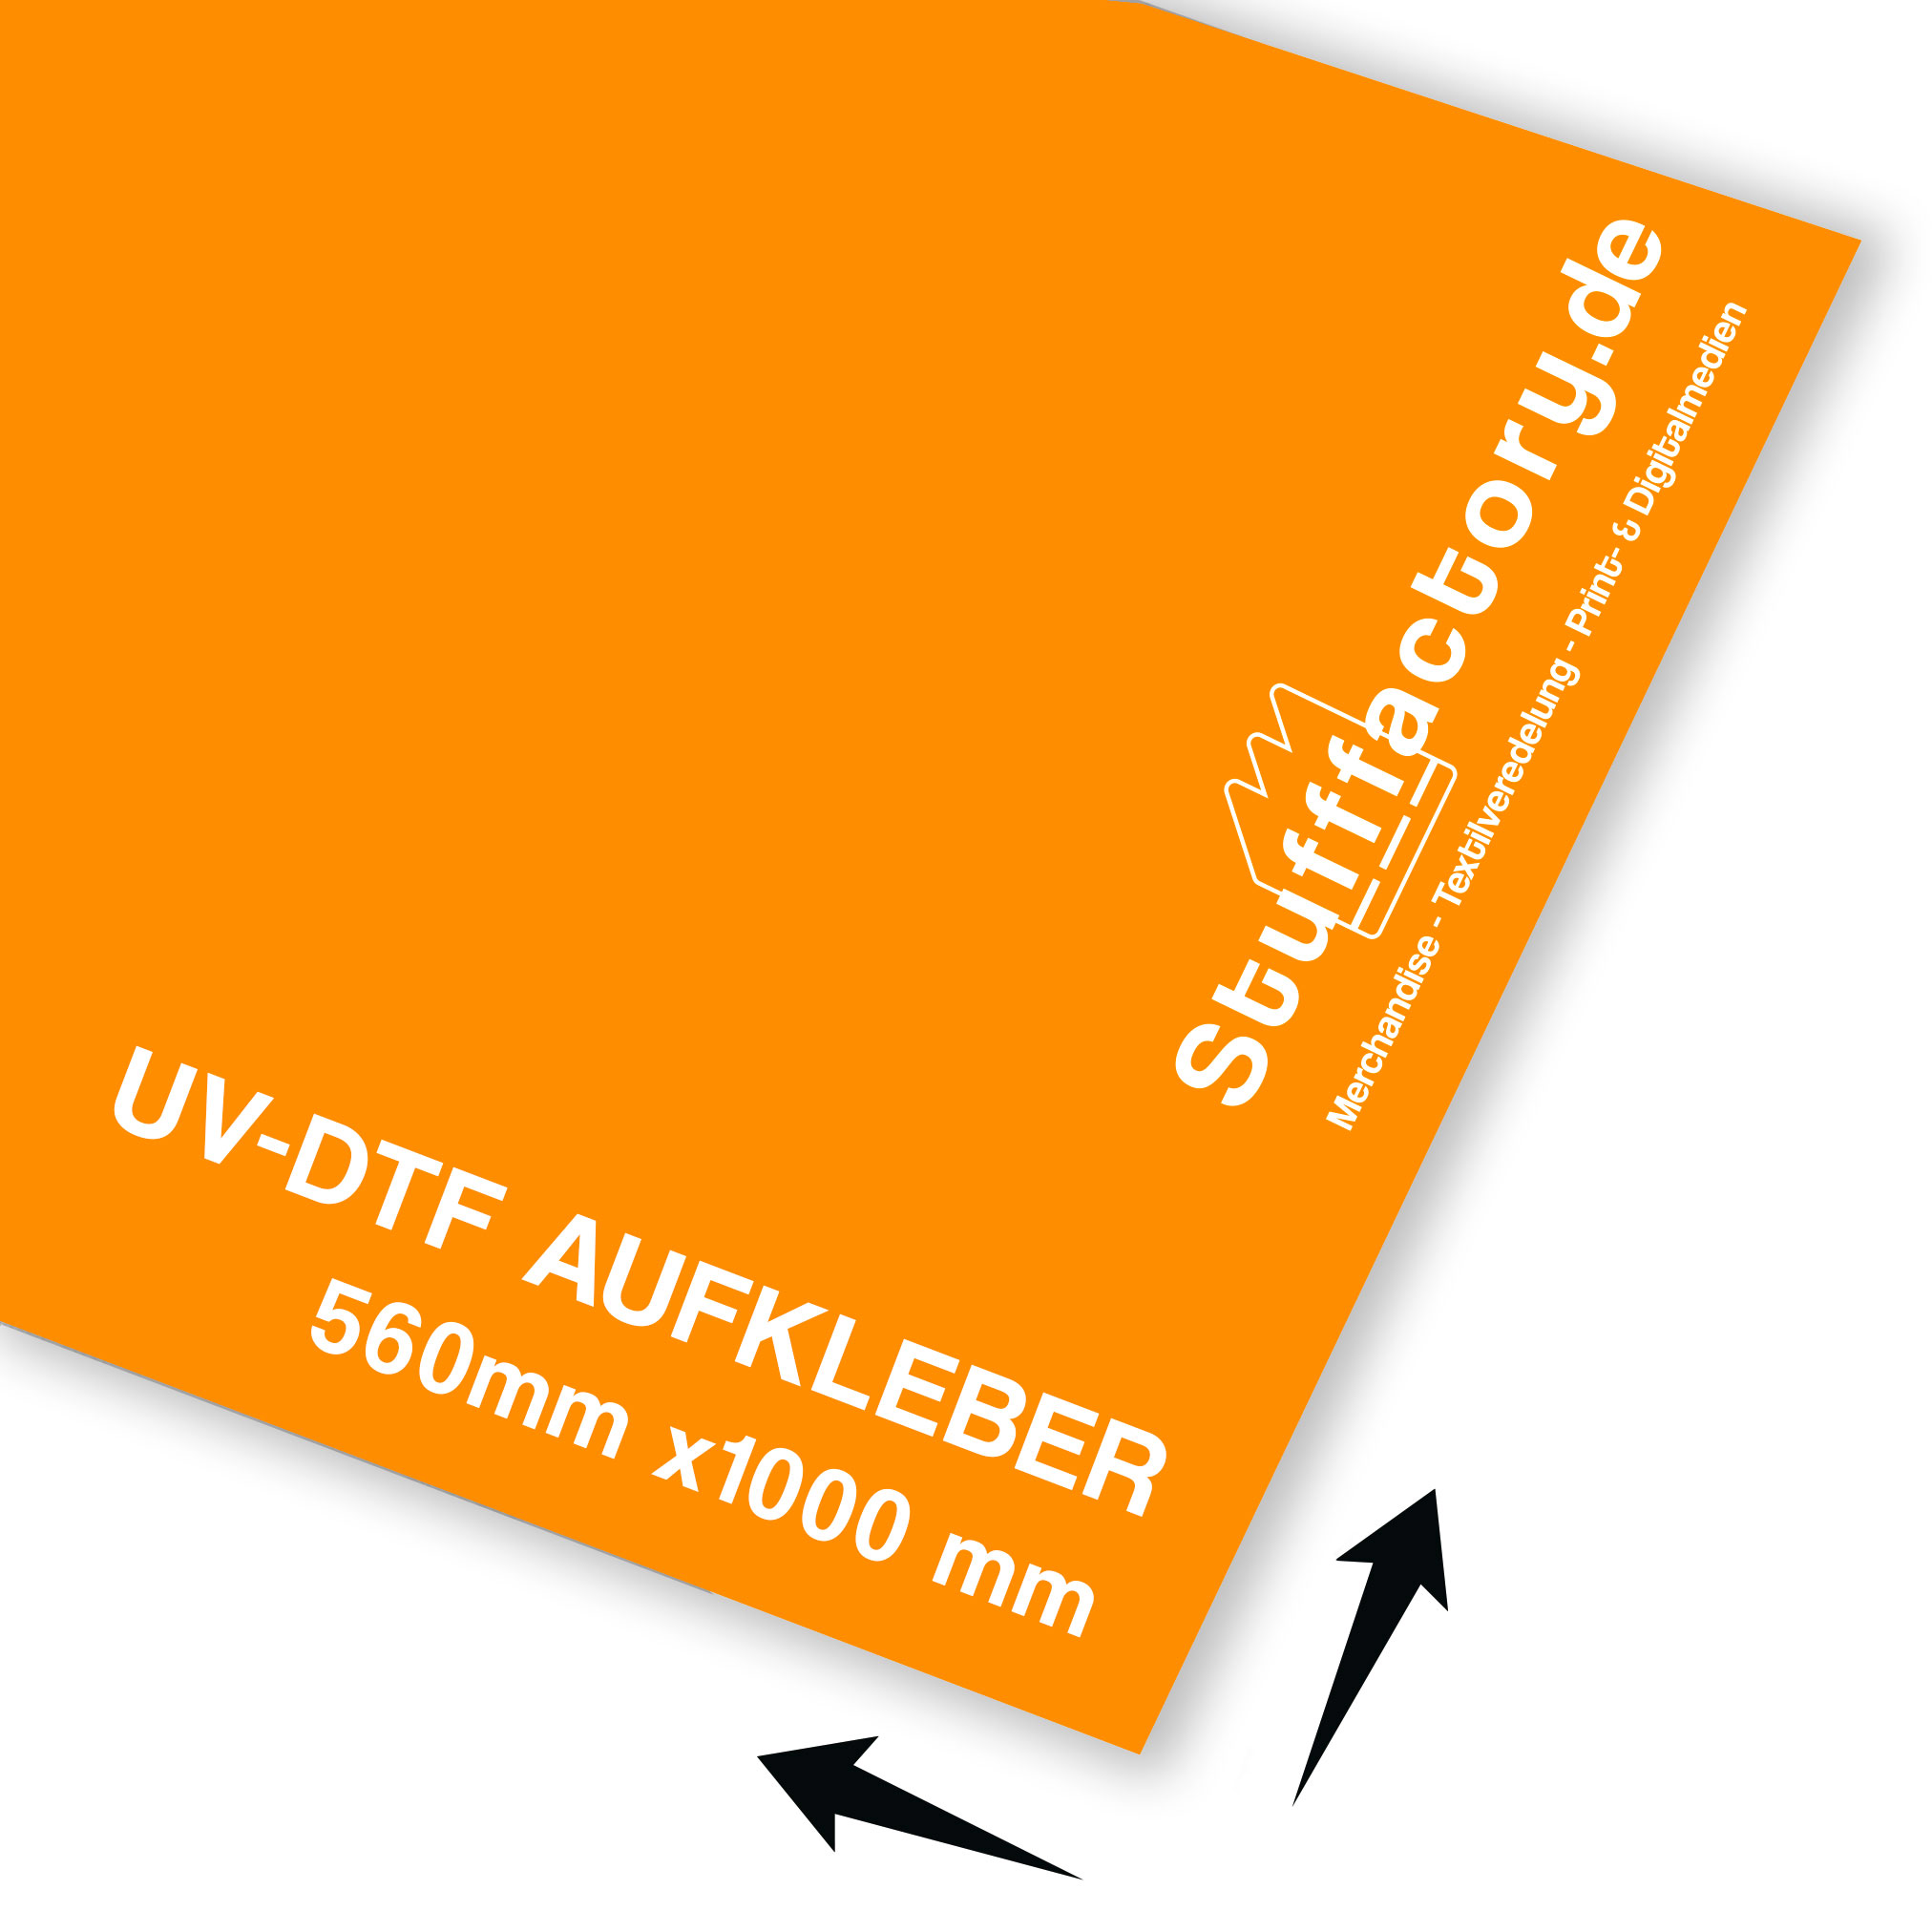 UV-DTF Transfer 560 x 1000 mm - Sticker / Aufkleber